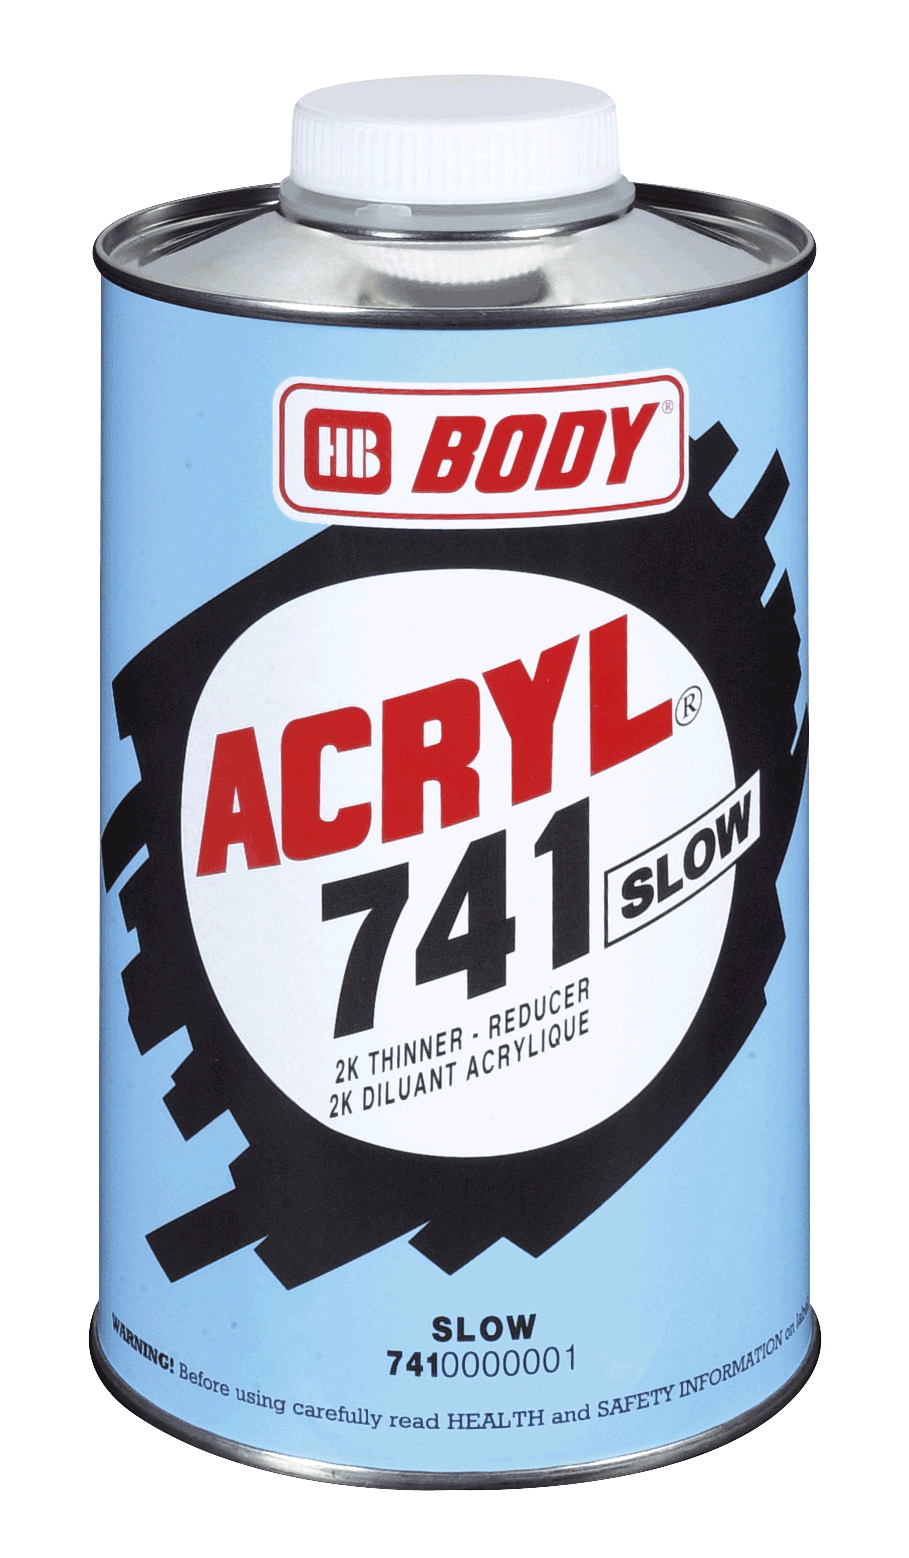 HB BODY Body 741 Acryl thinner slow 5L